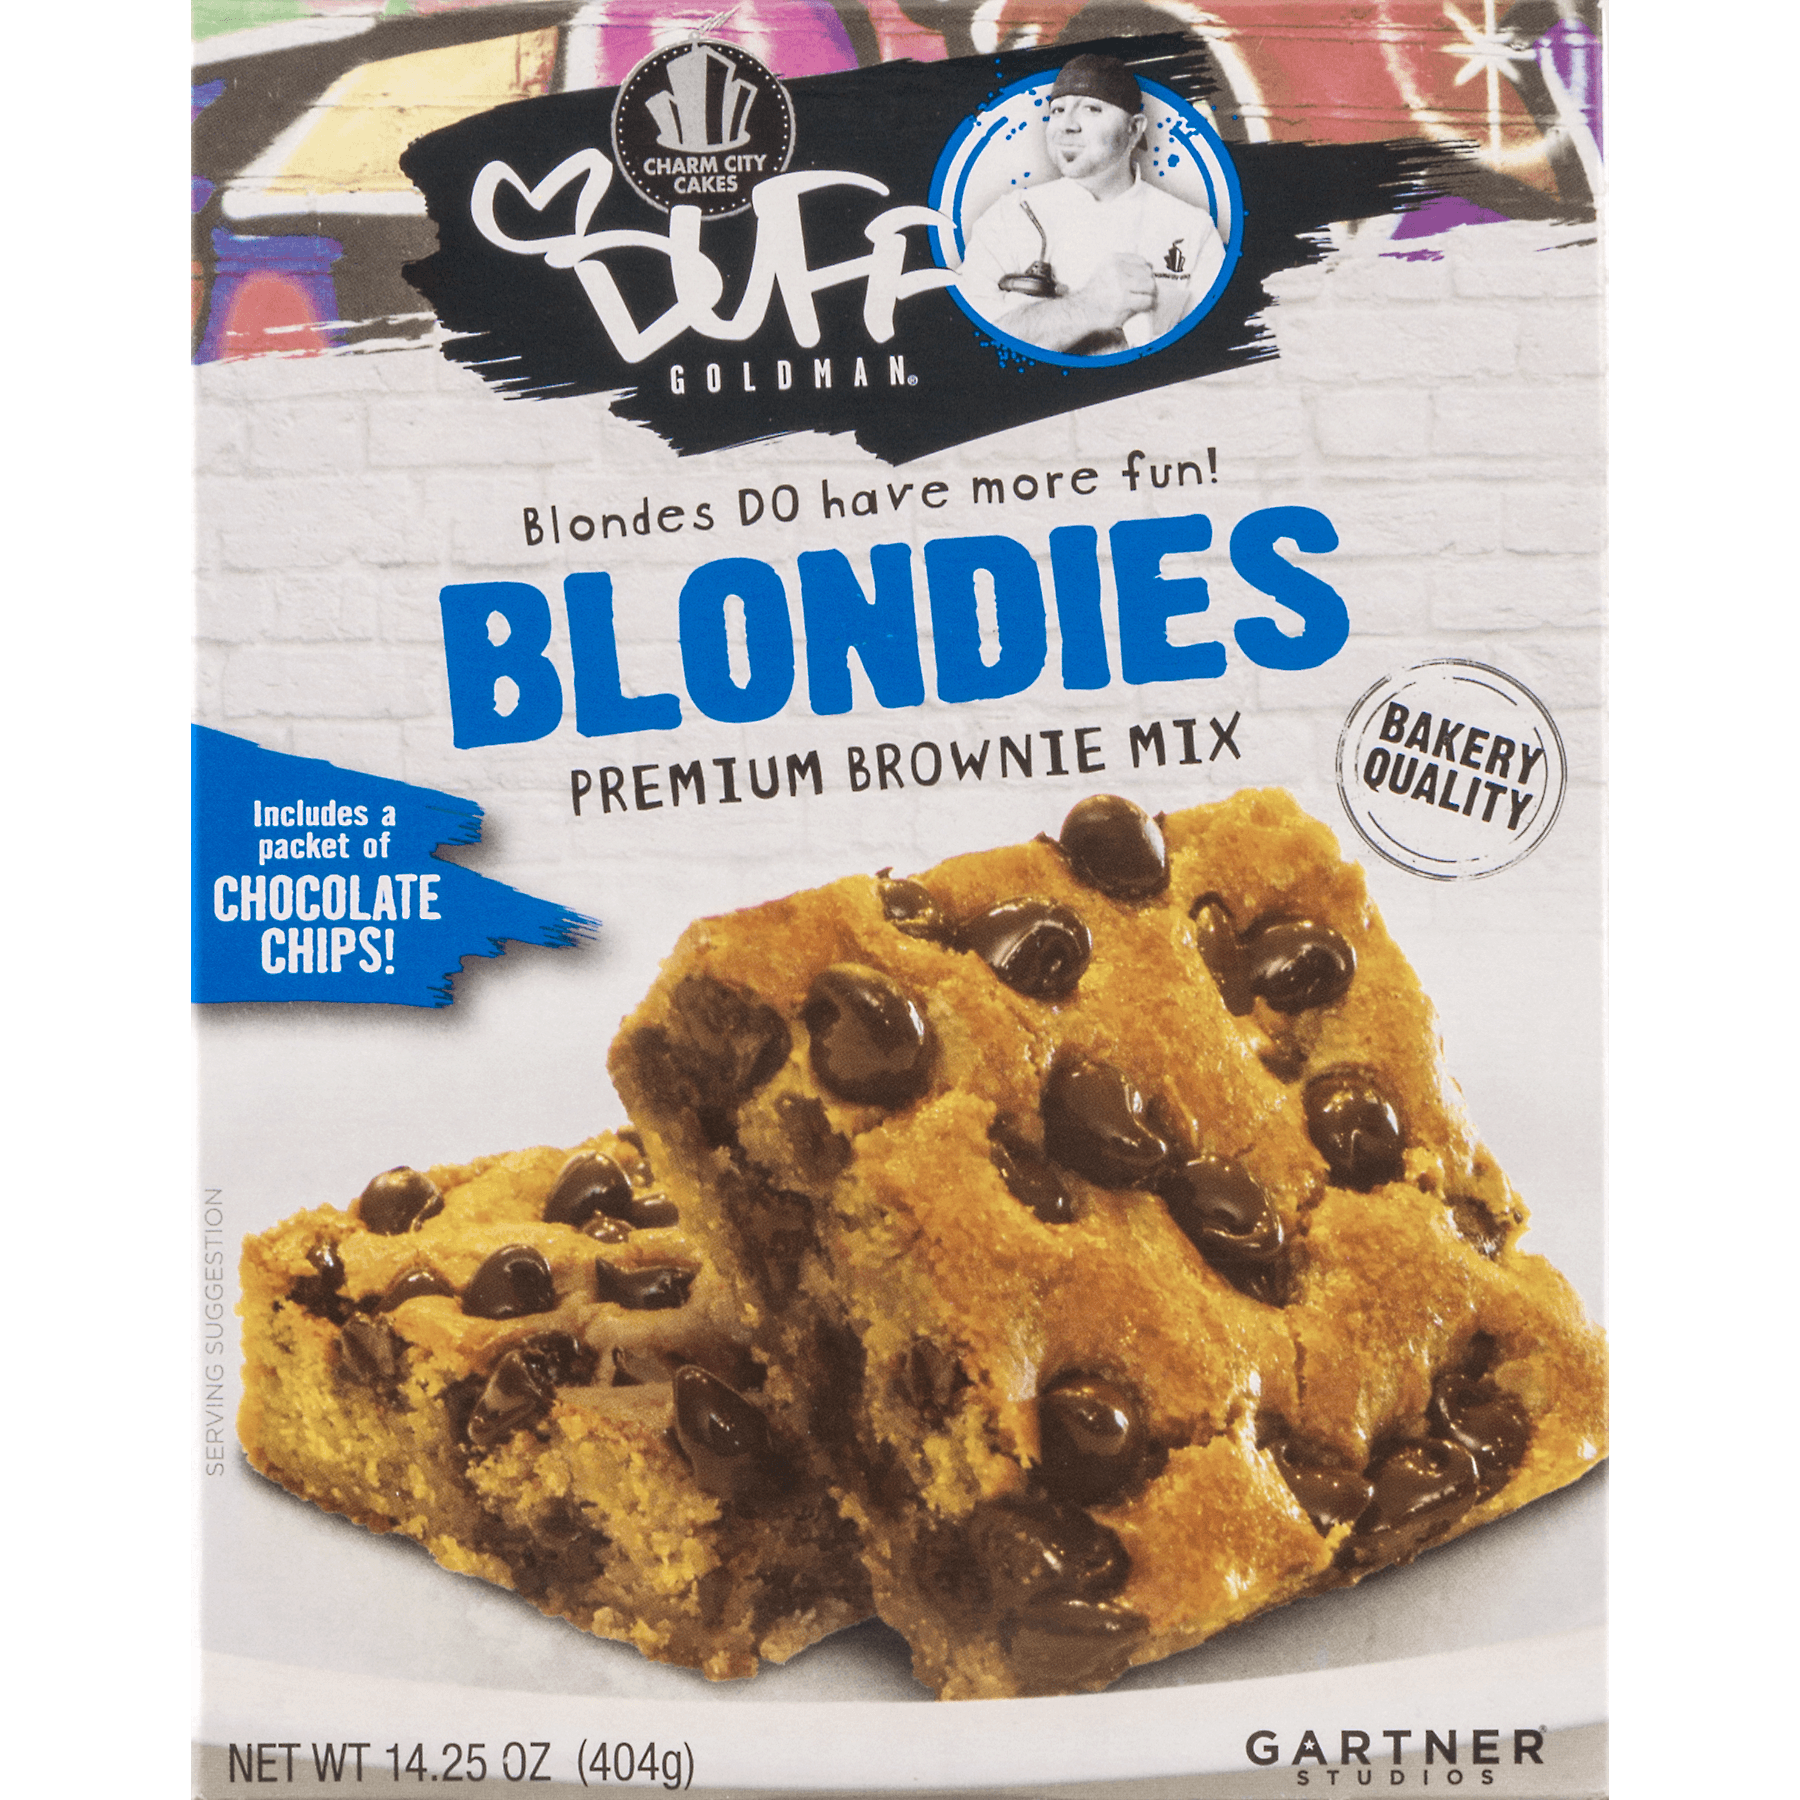 Duff Goldman Blondies Premium Brownie Mix, 14.25 oz - image 4 of 8